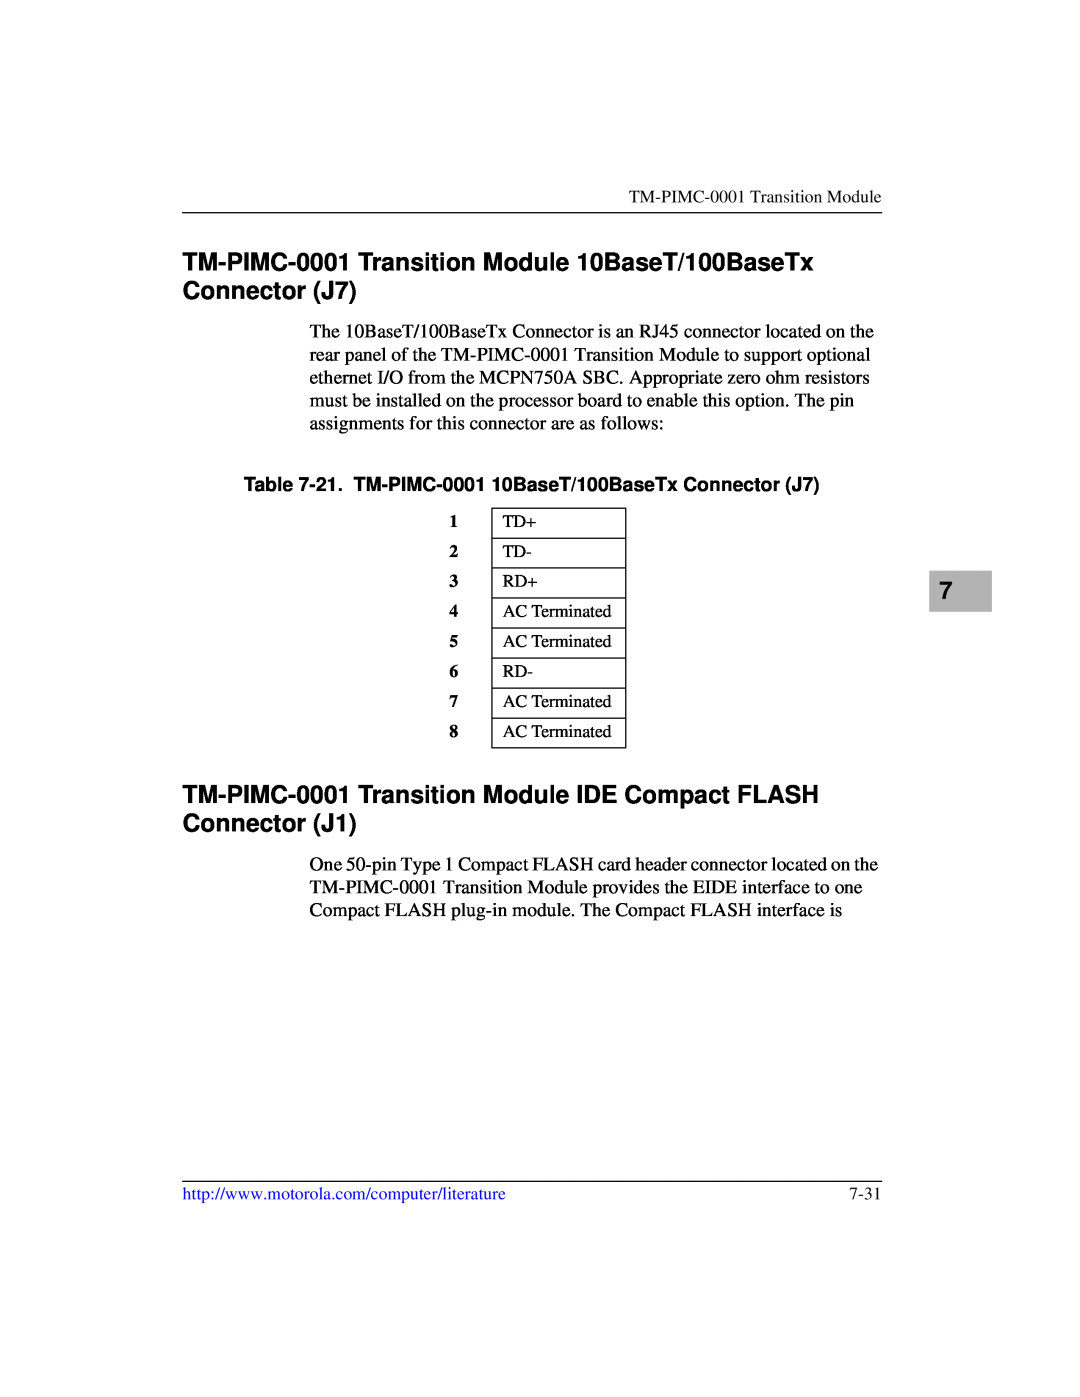 Motorola IH5, MCPN750A manual TM-PIMC-0001 Transition Module 10BaseT/100BaseTx Connector J7 